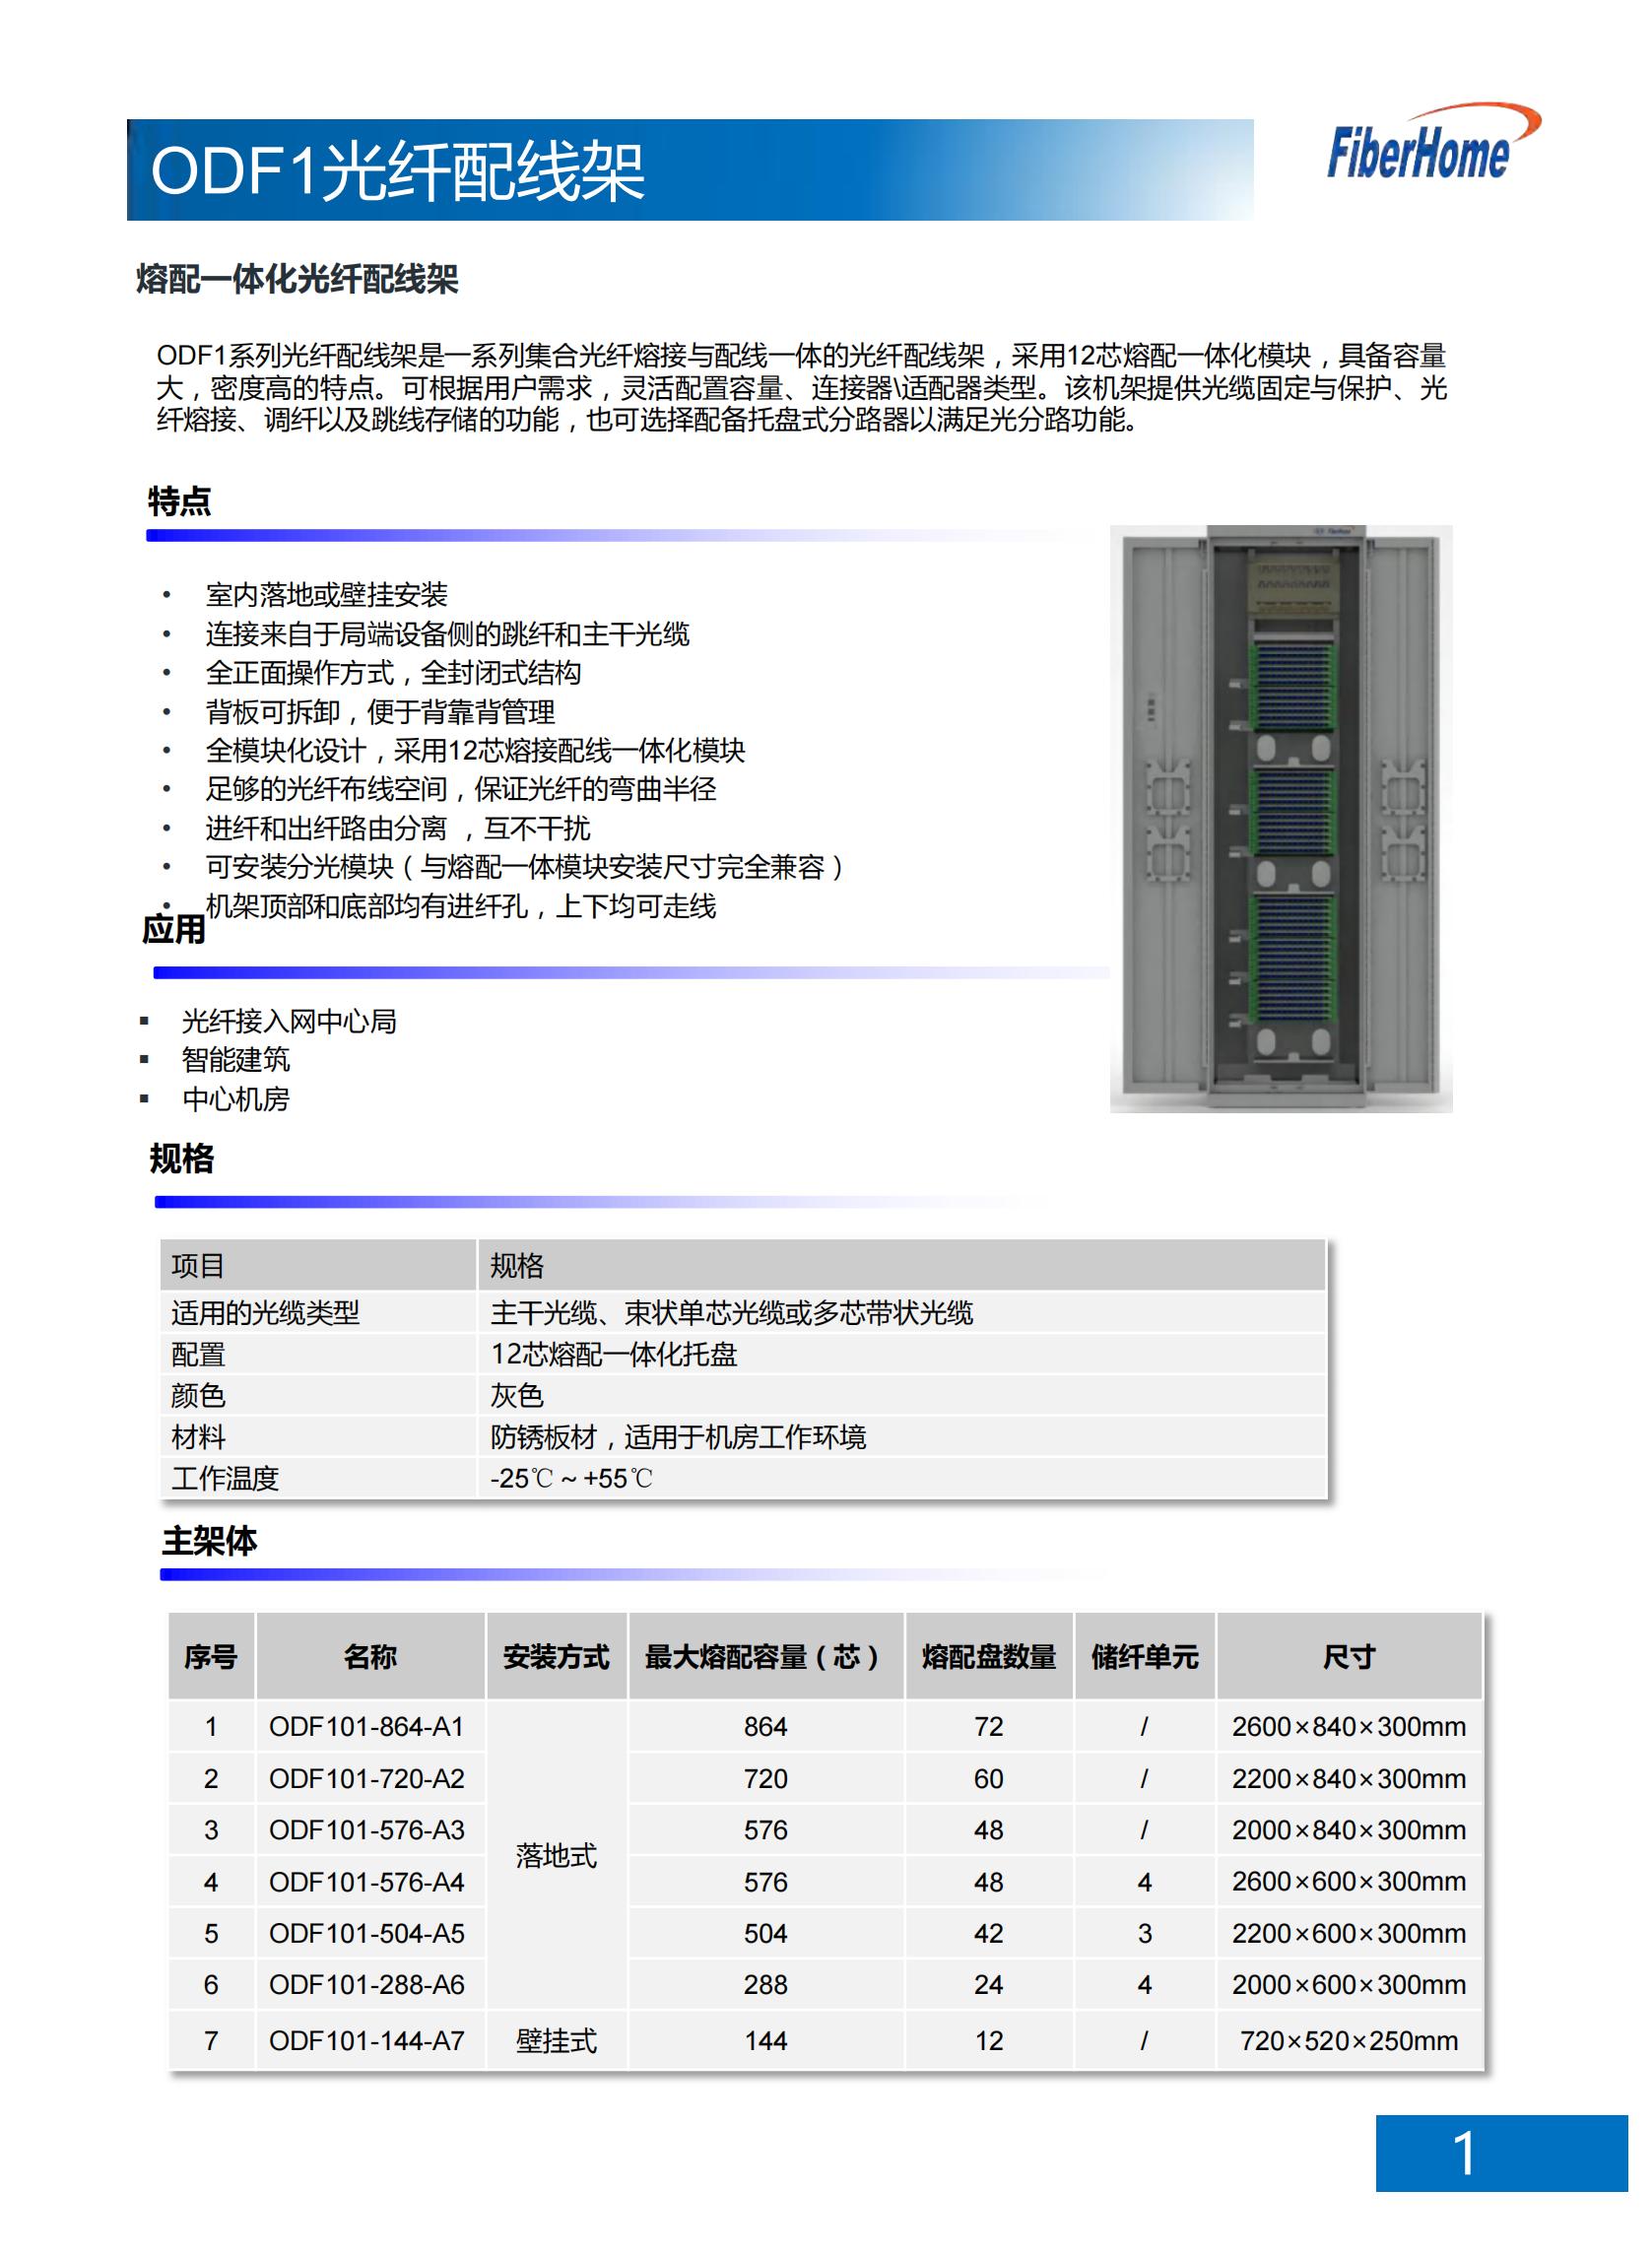 ODF101-576-A4-FC ODF光纤配线架 （576芯落地式 全部含12芯FC熔配一体化单元） 带储纤单元）